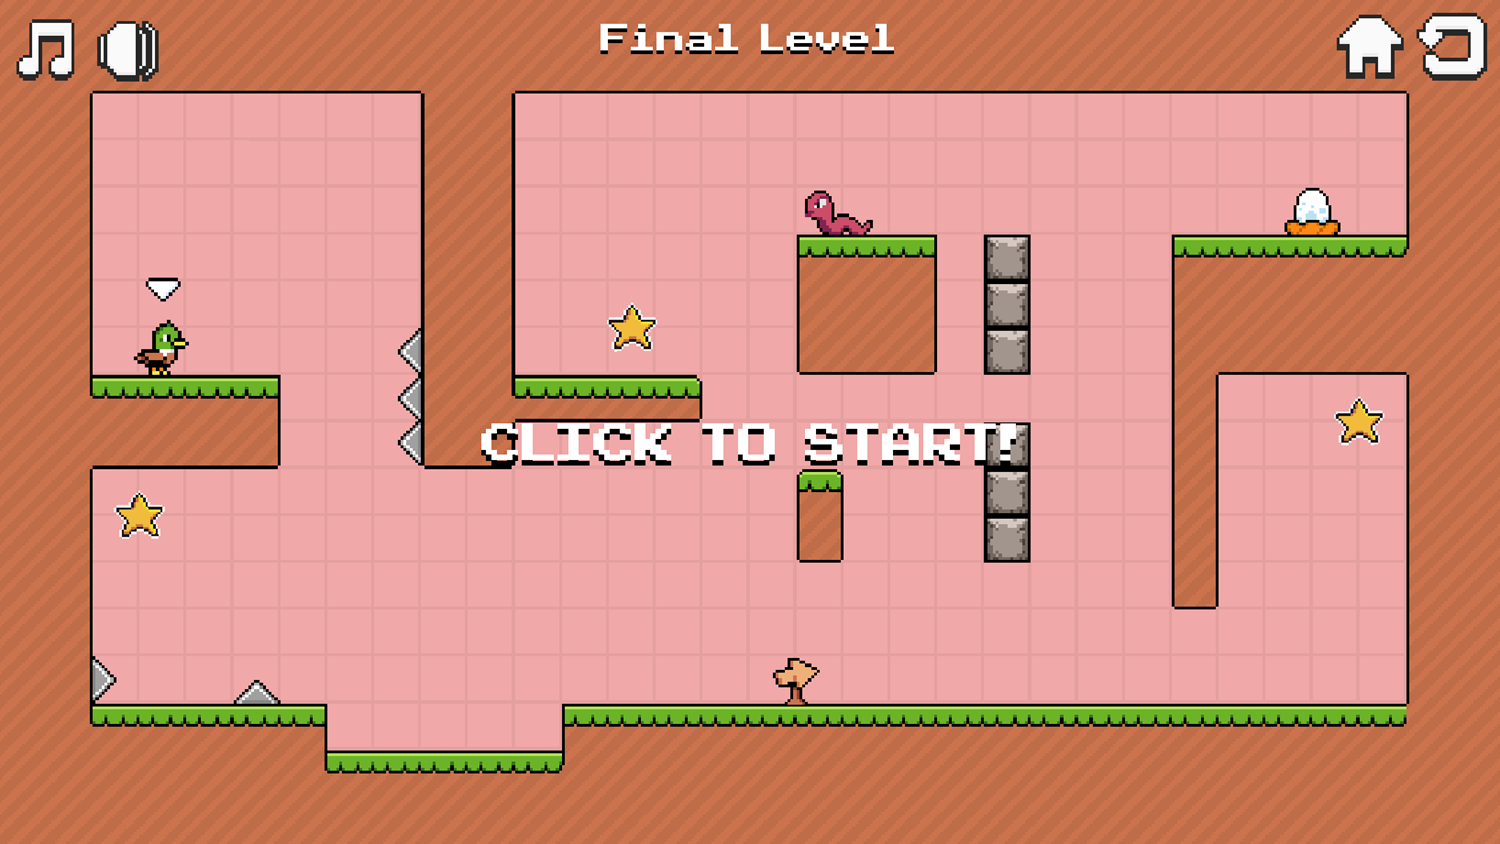 Duck Auto Run Game Final Level Screen Screenshot.